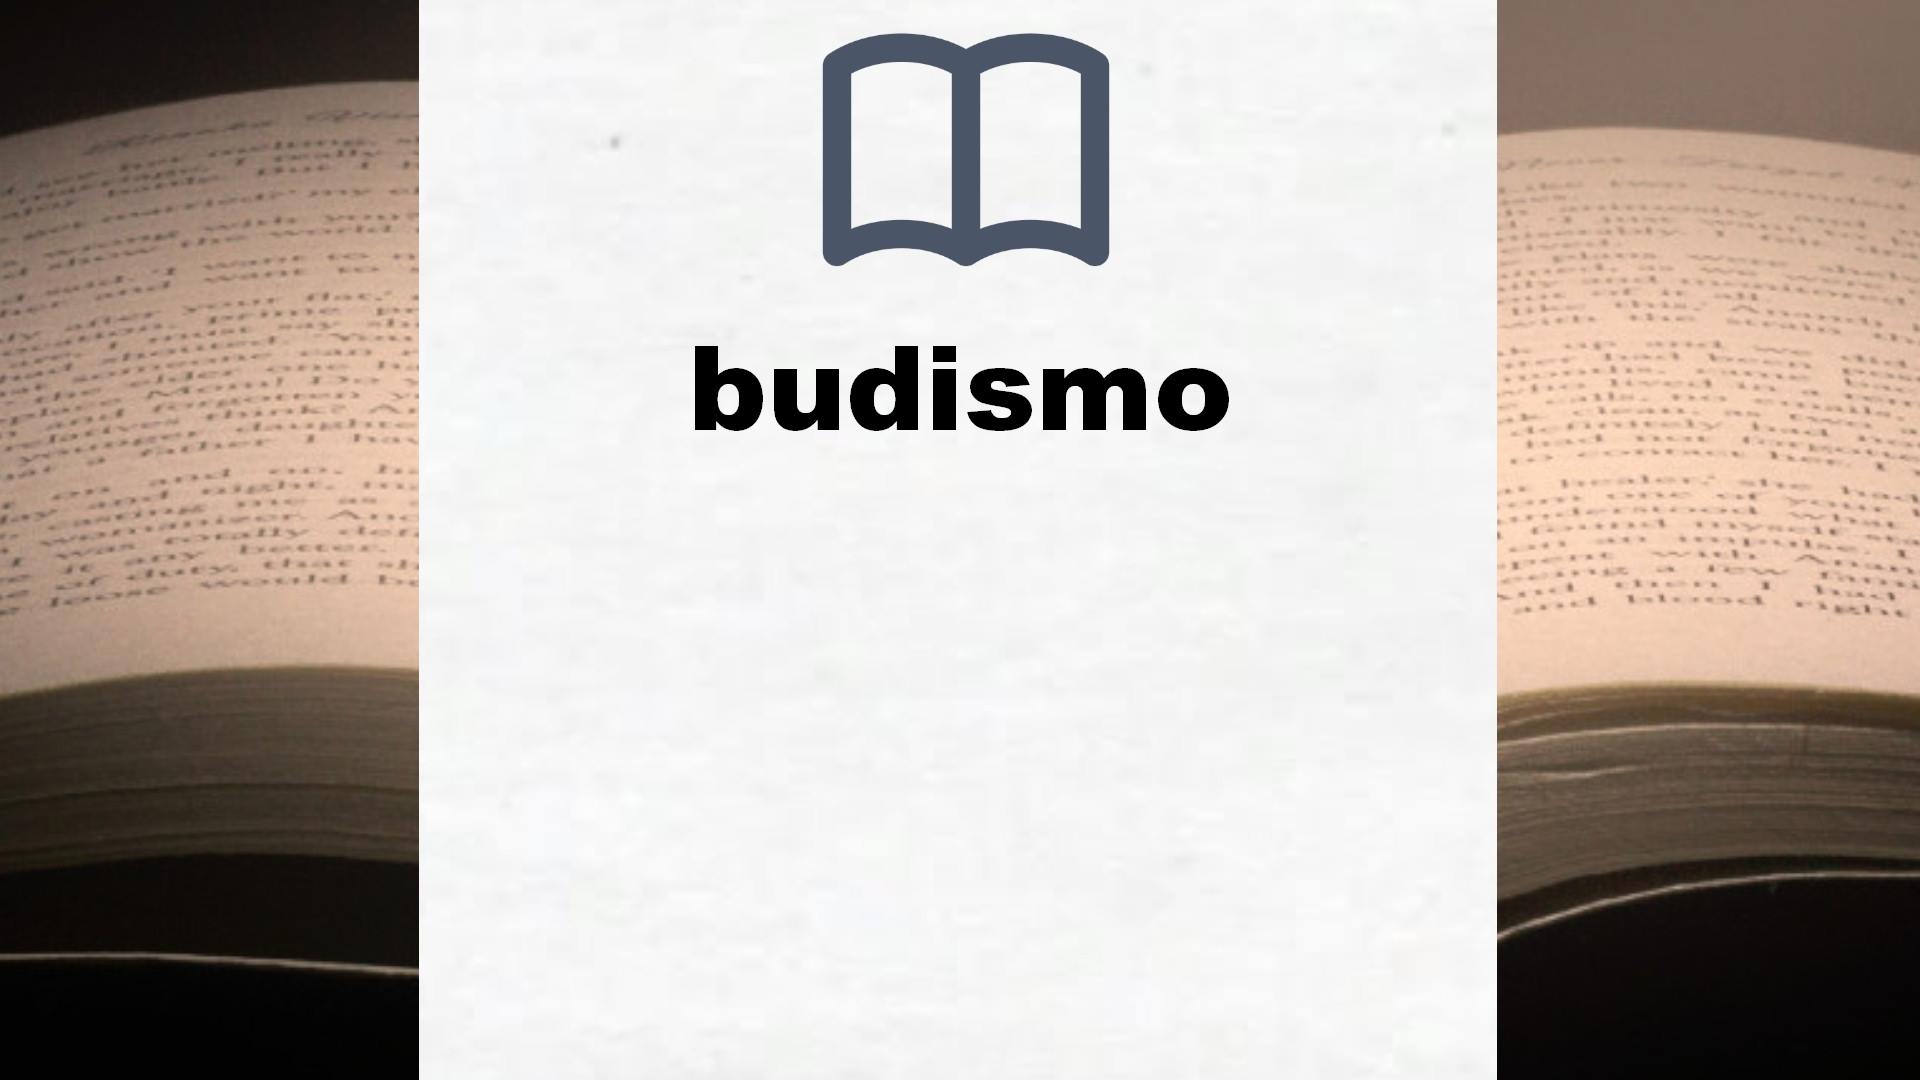 Libros sobre budismo